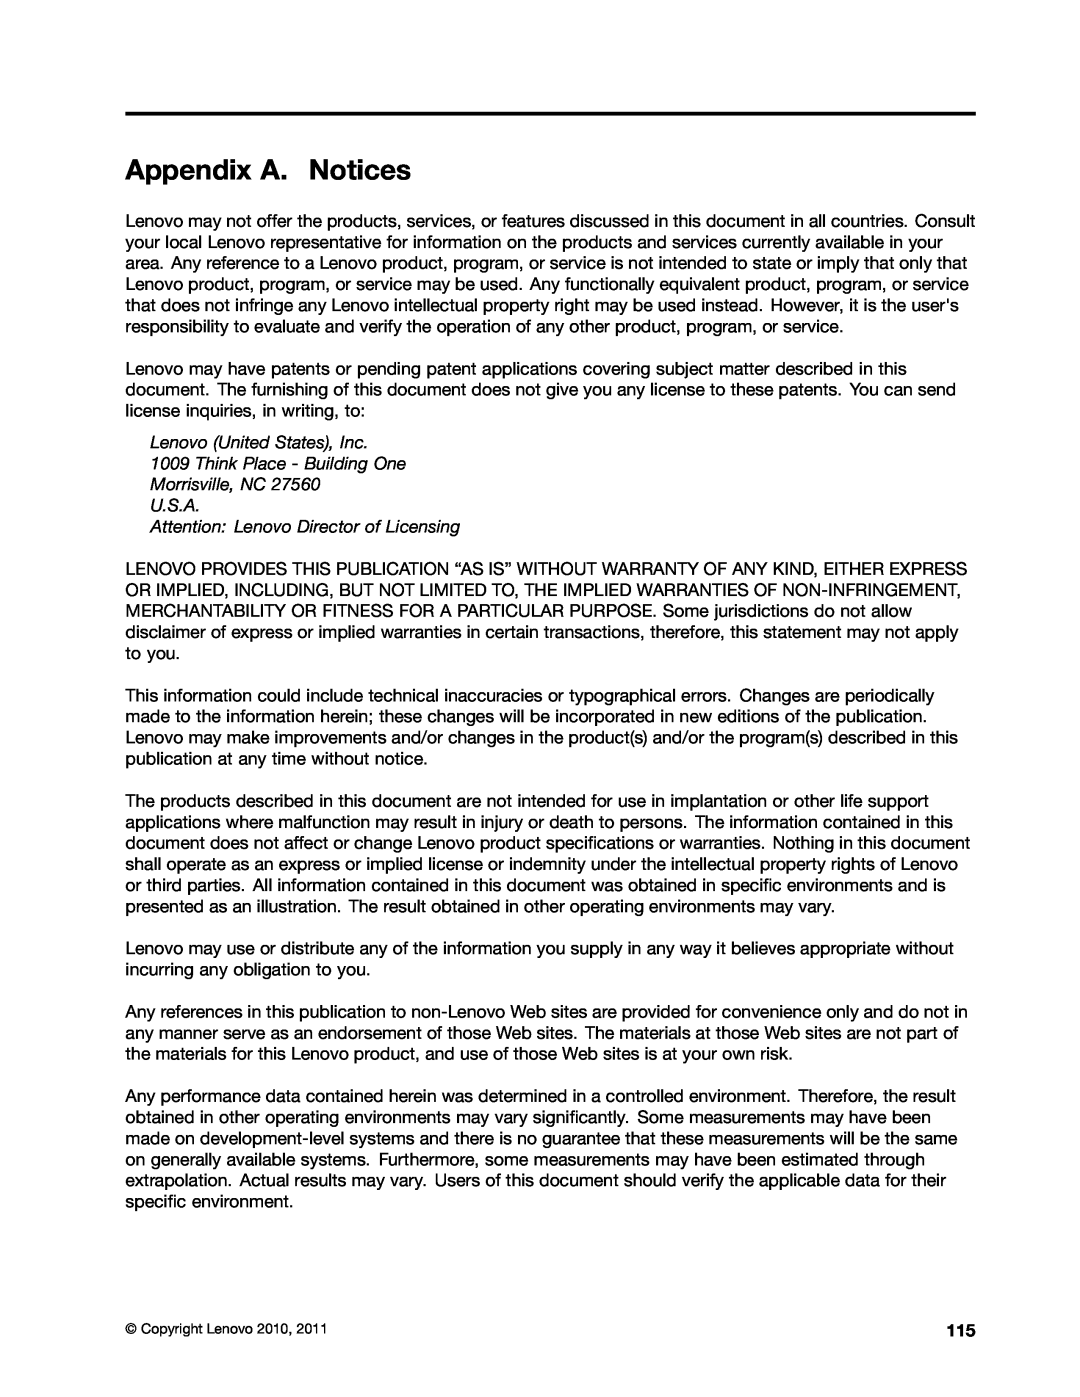 Lenovo E10 manual Appendix A. Notices, Lenovo United States, Inc 1009 Think Place - Building One 